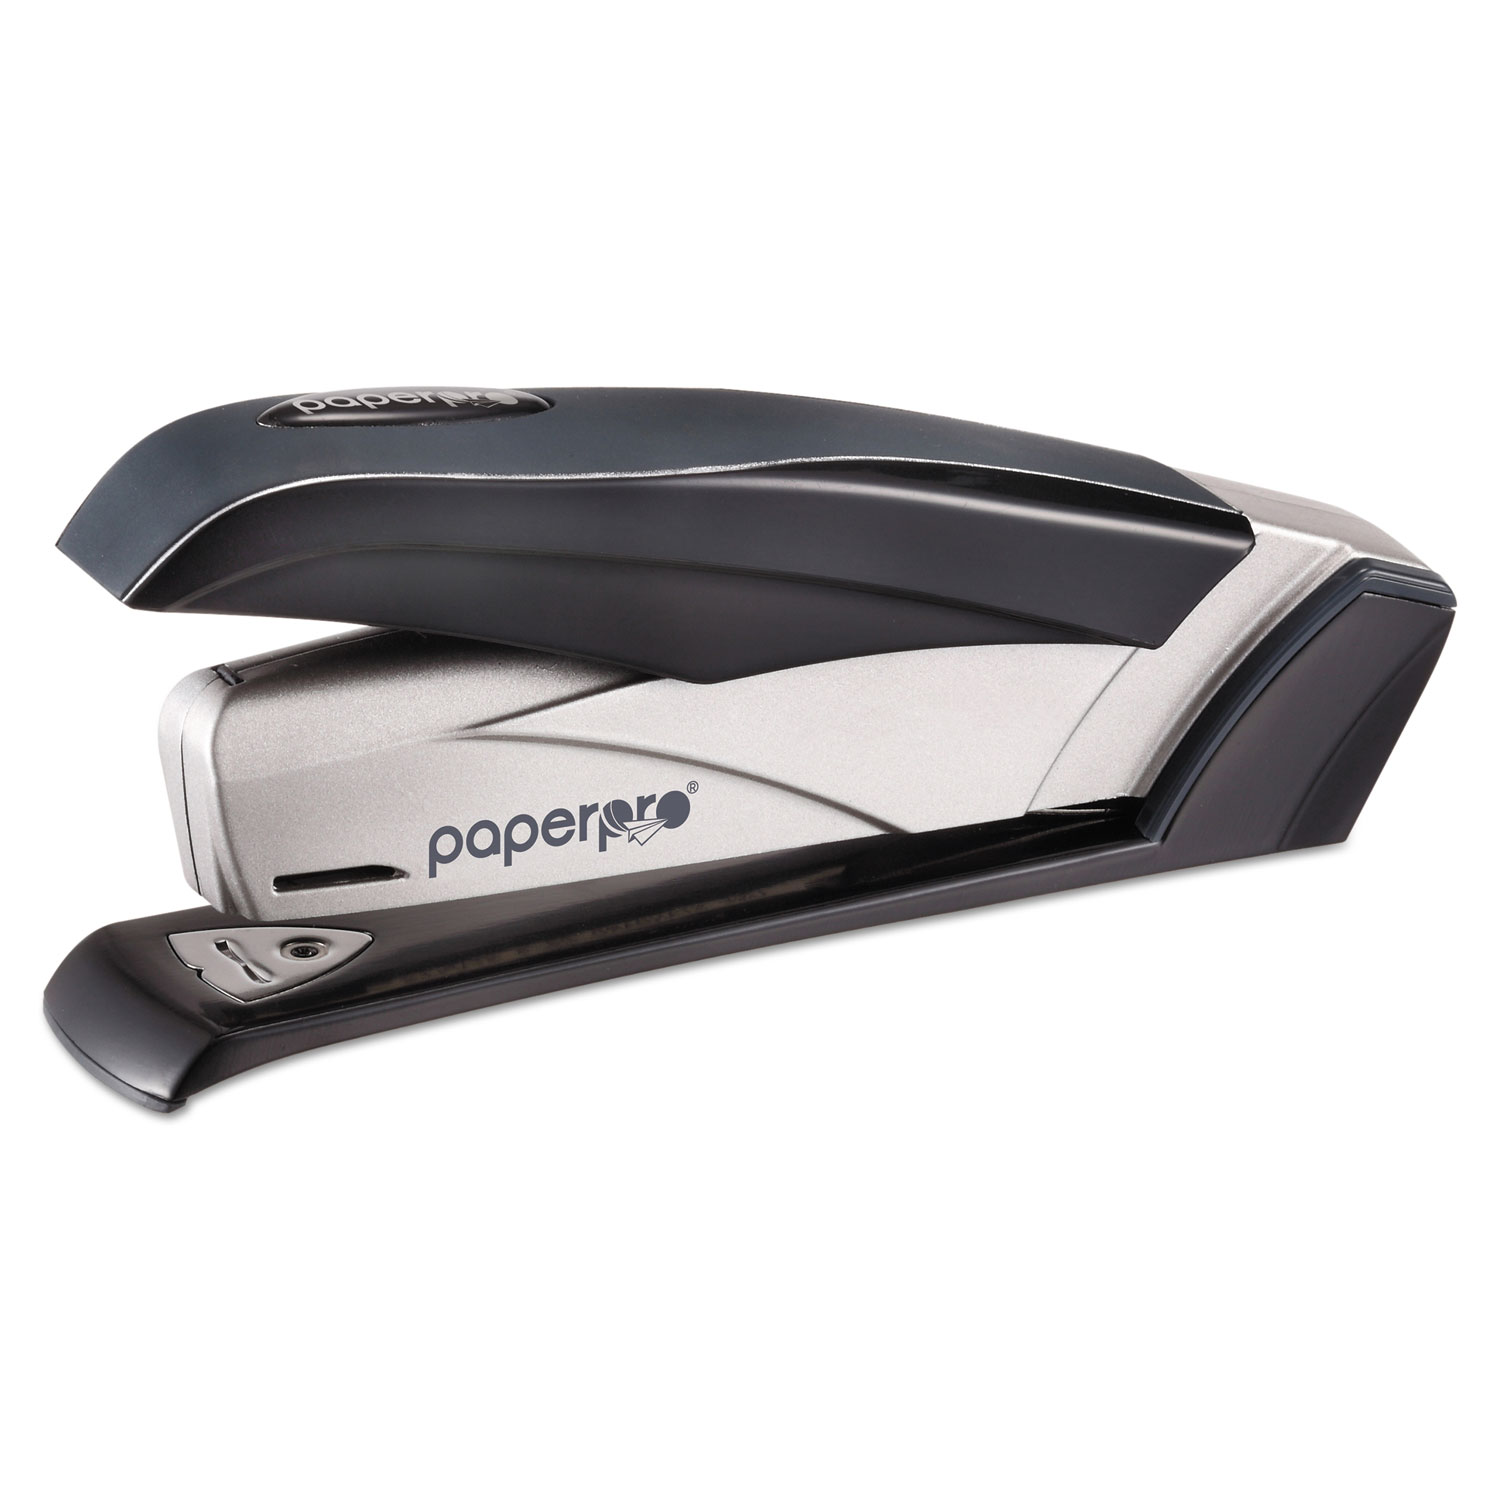 inFLUENCE + 28 Premium Desktop Stapler, 28-Sheet Capacity, Black/Silver